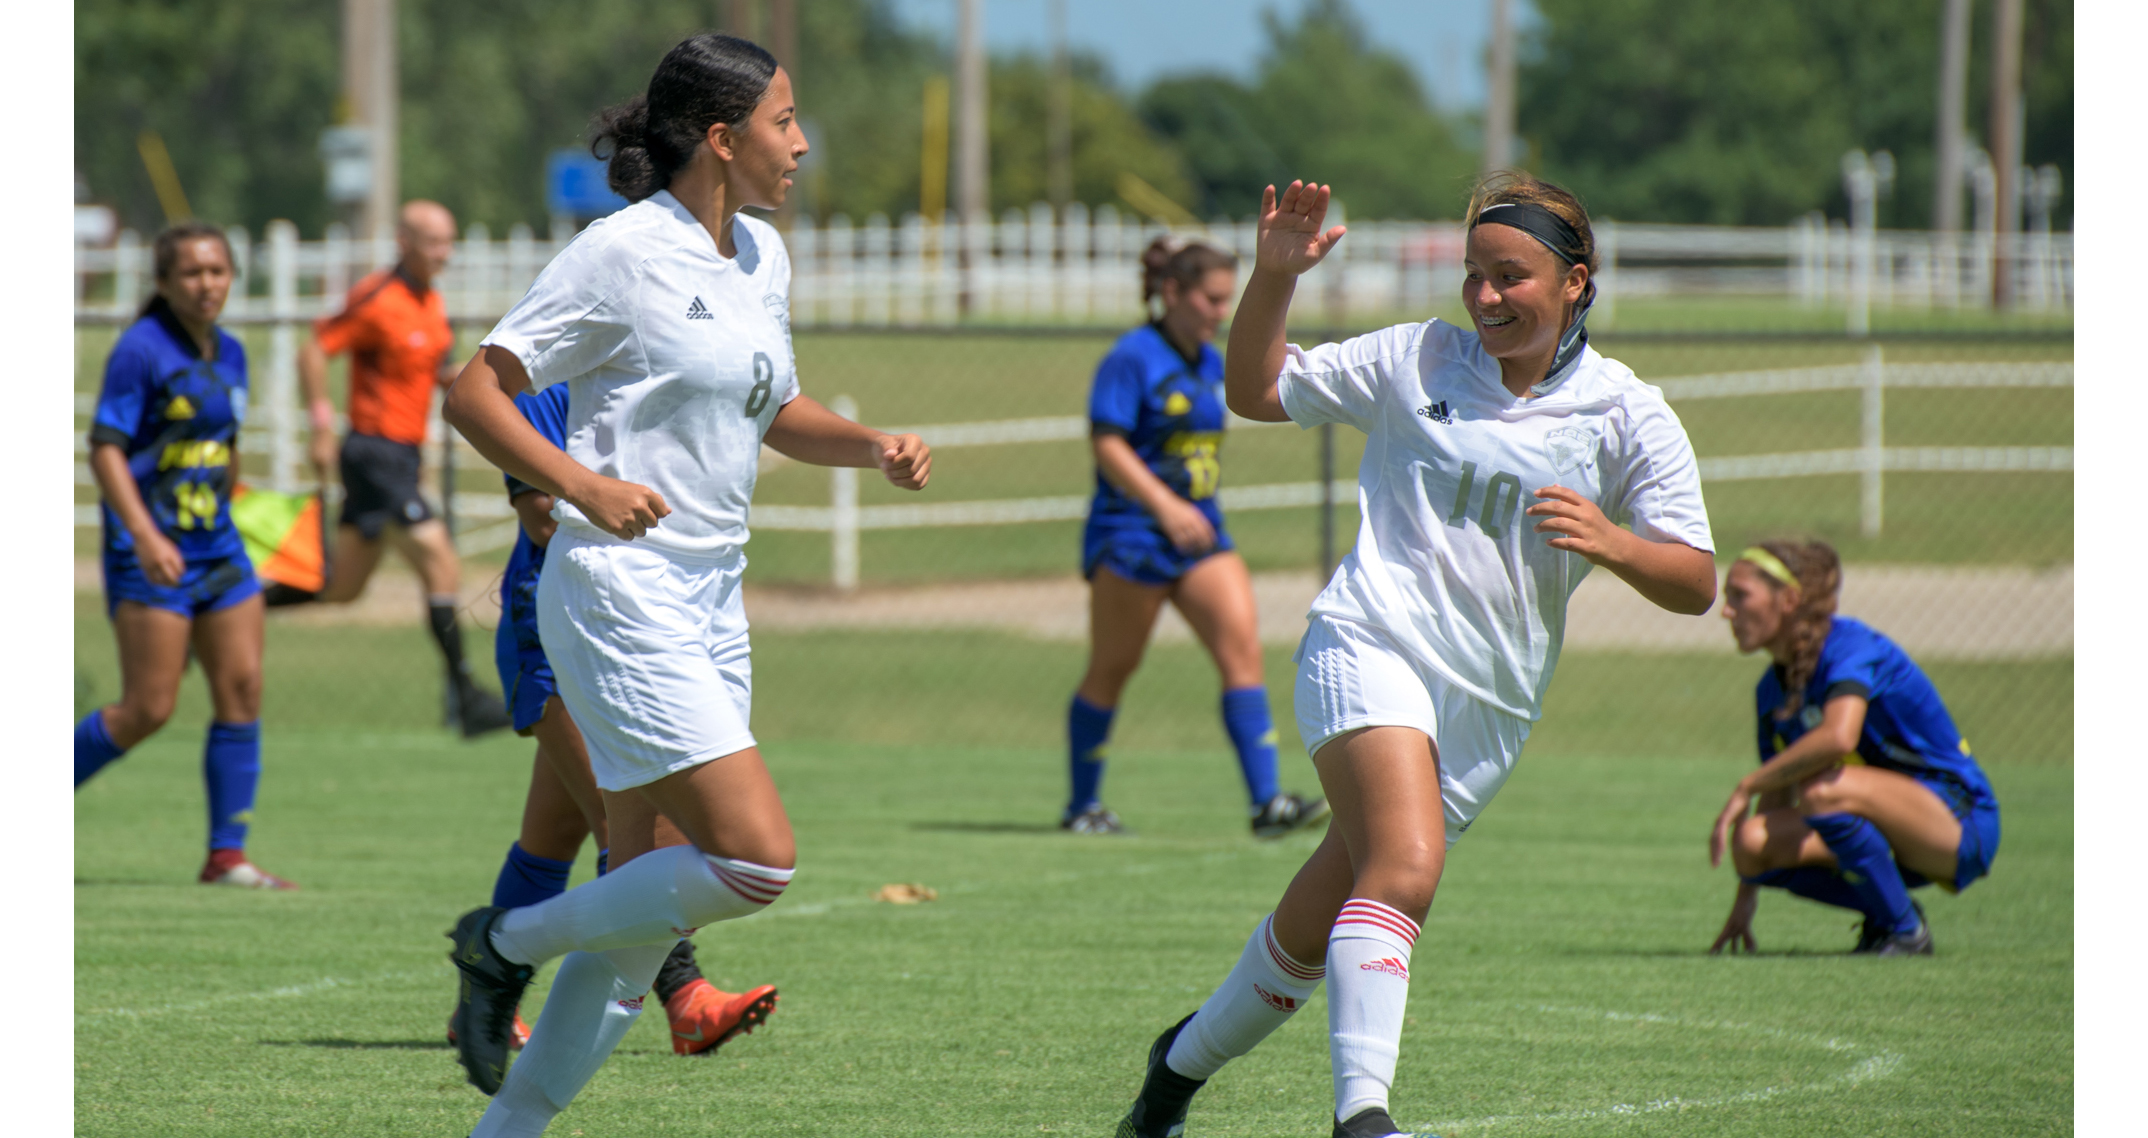 Women's Soccer advances in Region Tournament